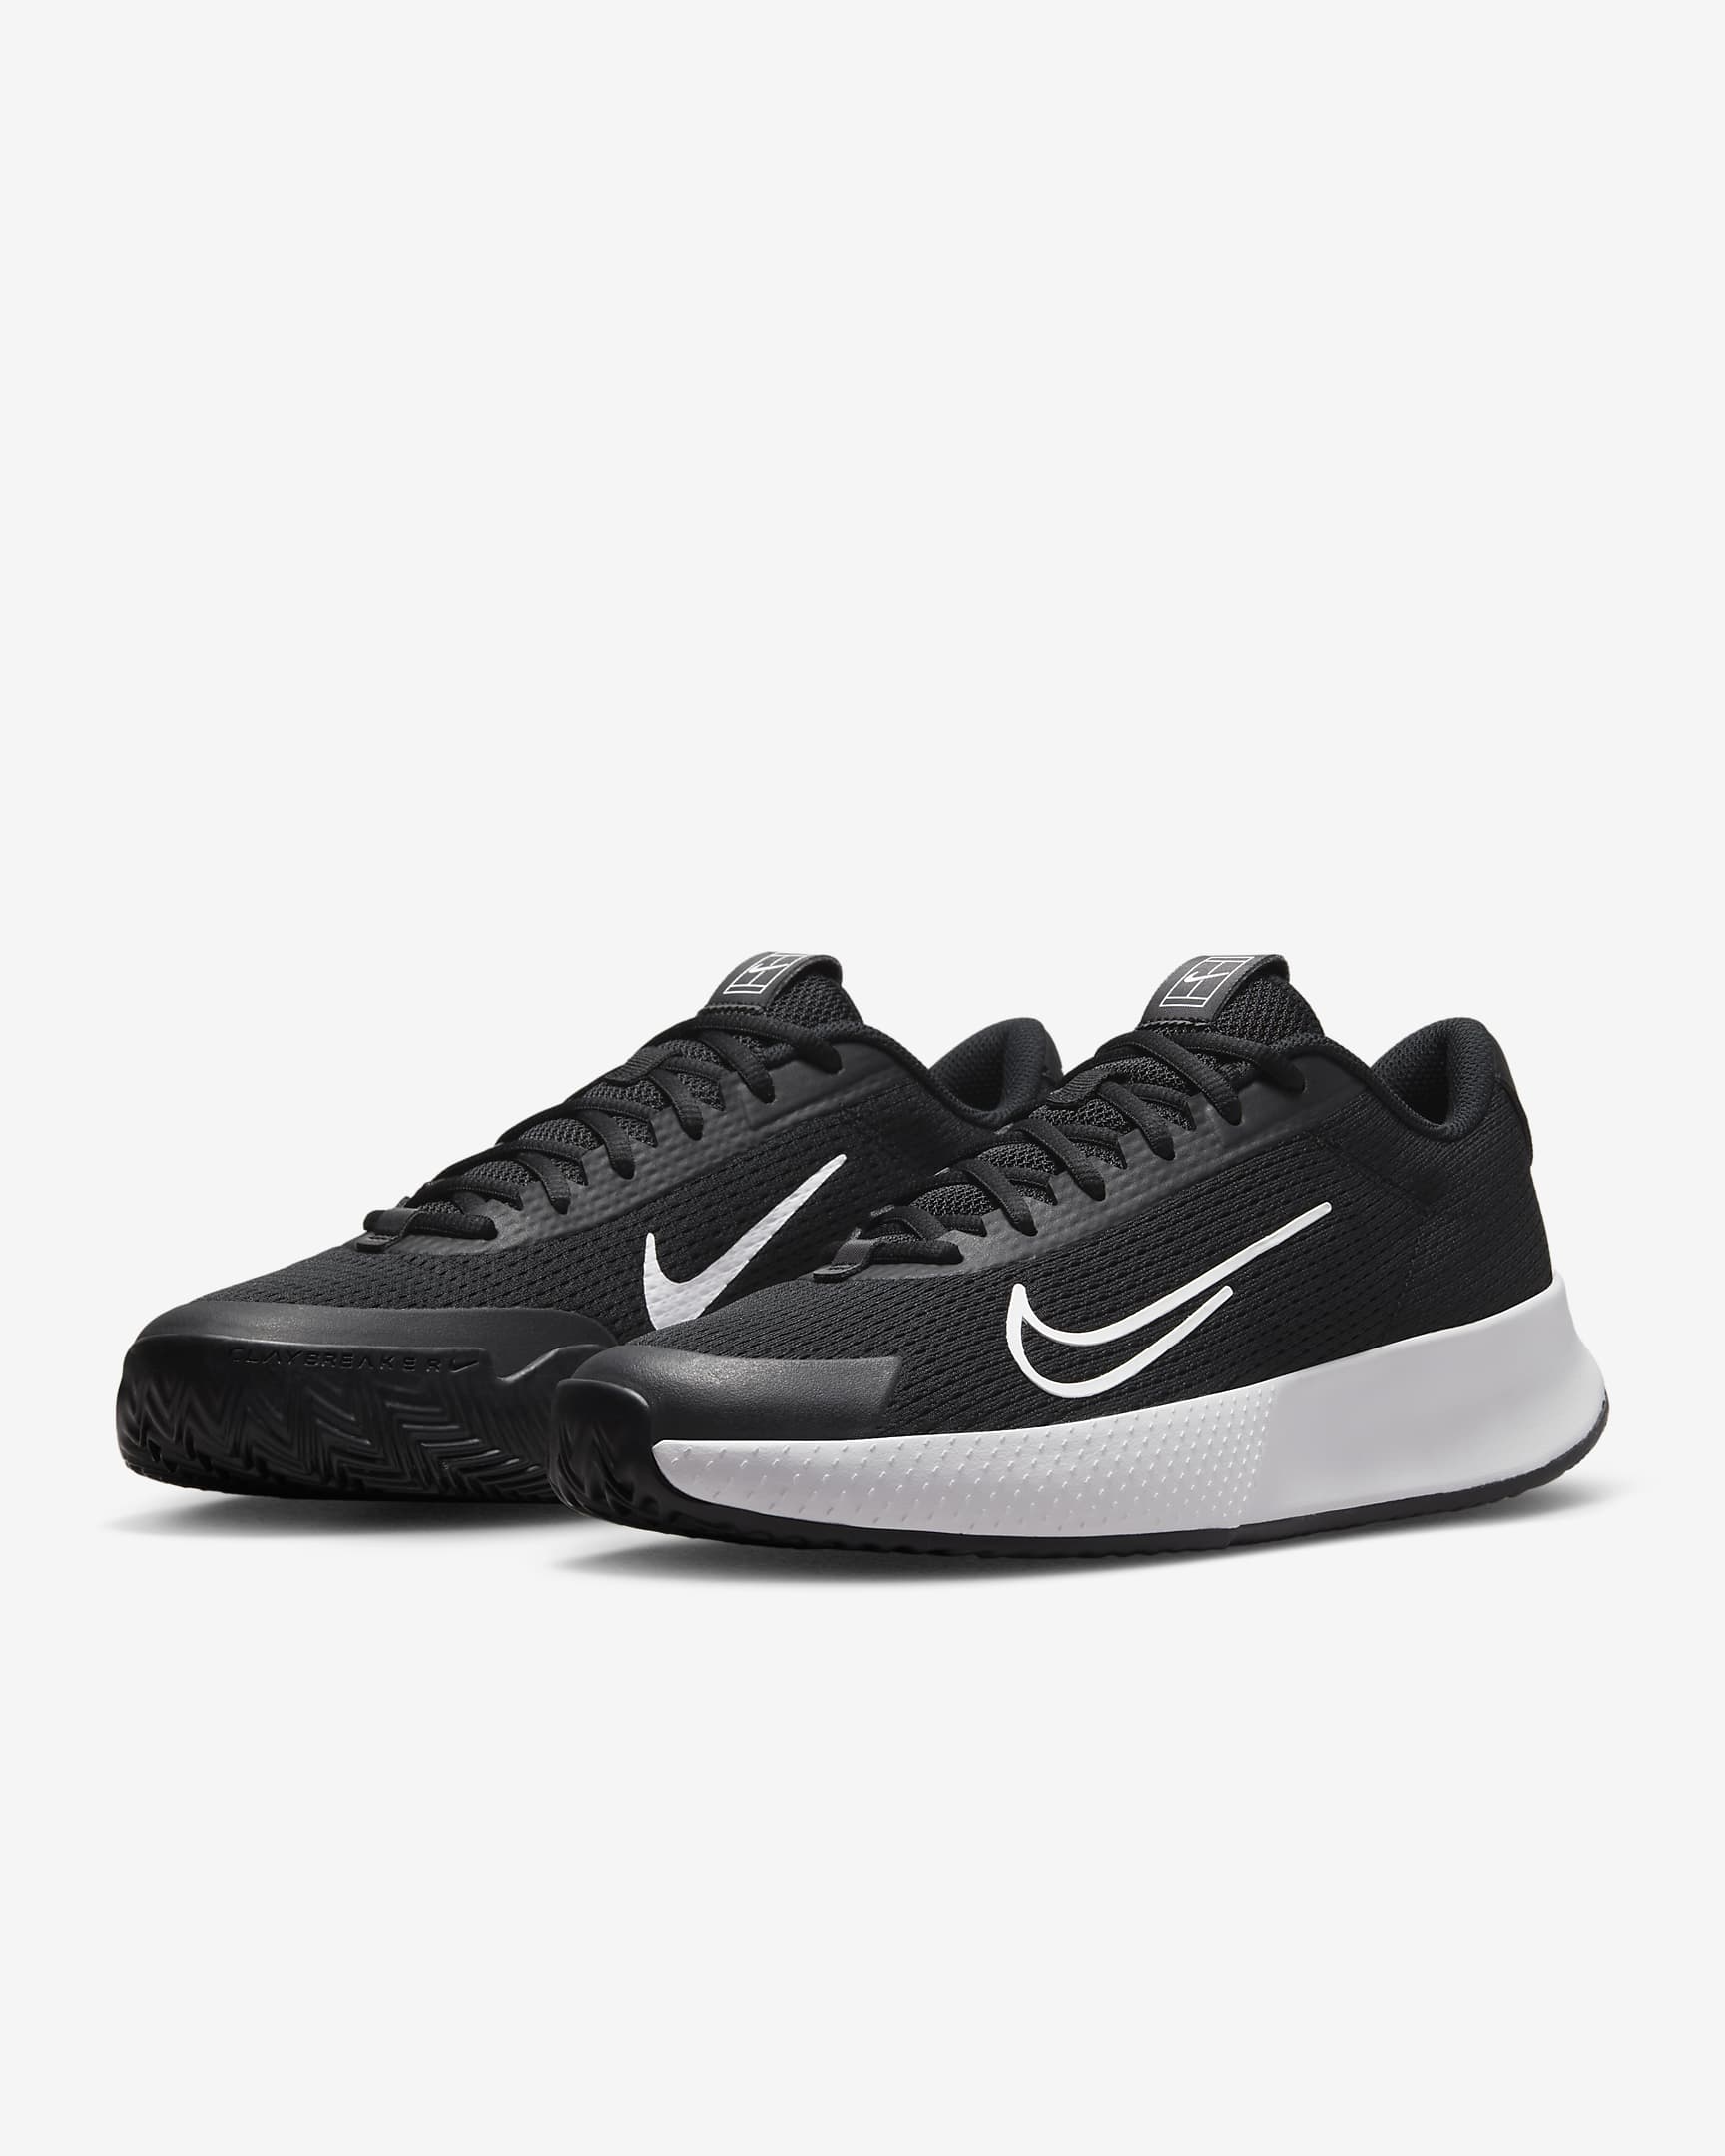 NikeCourt Vapor Lite 2 Men's Clay Tennis Shoes - Black/White